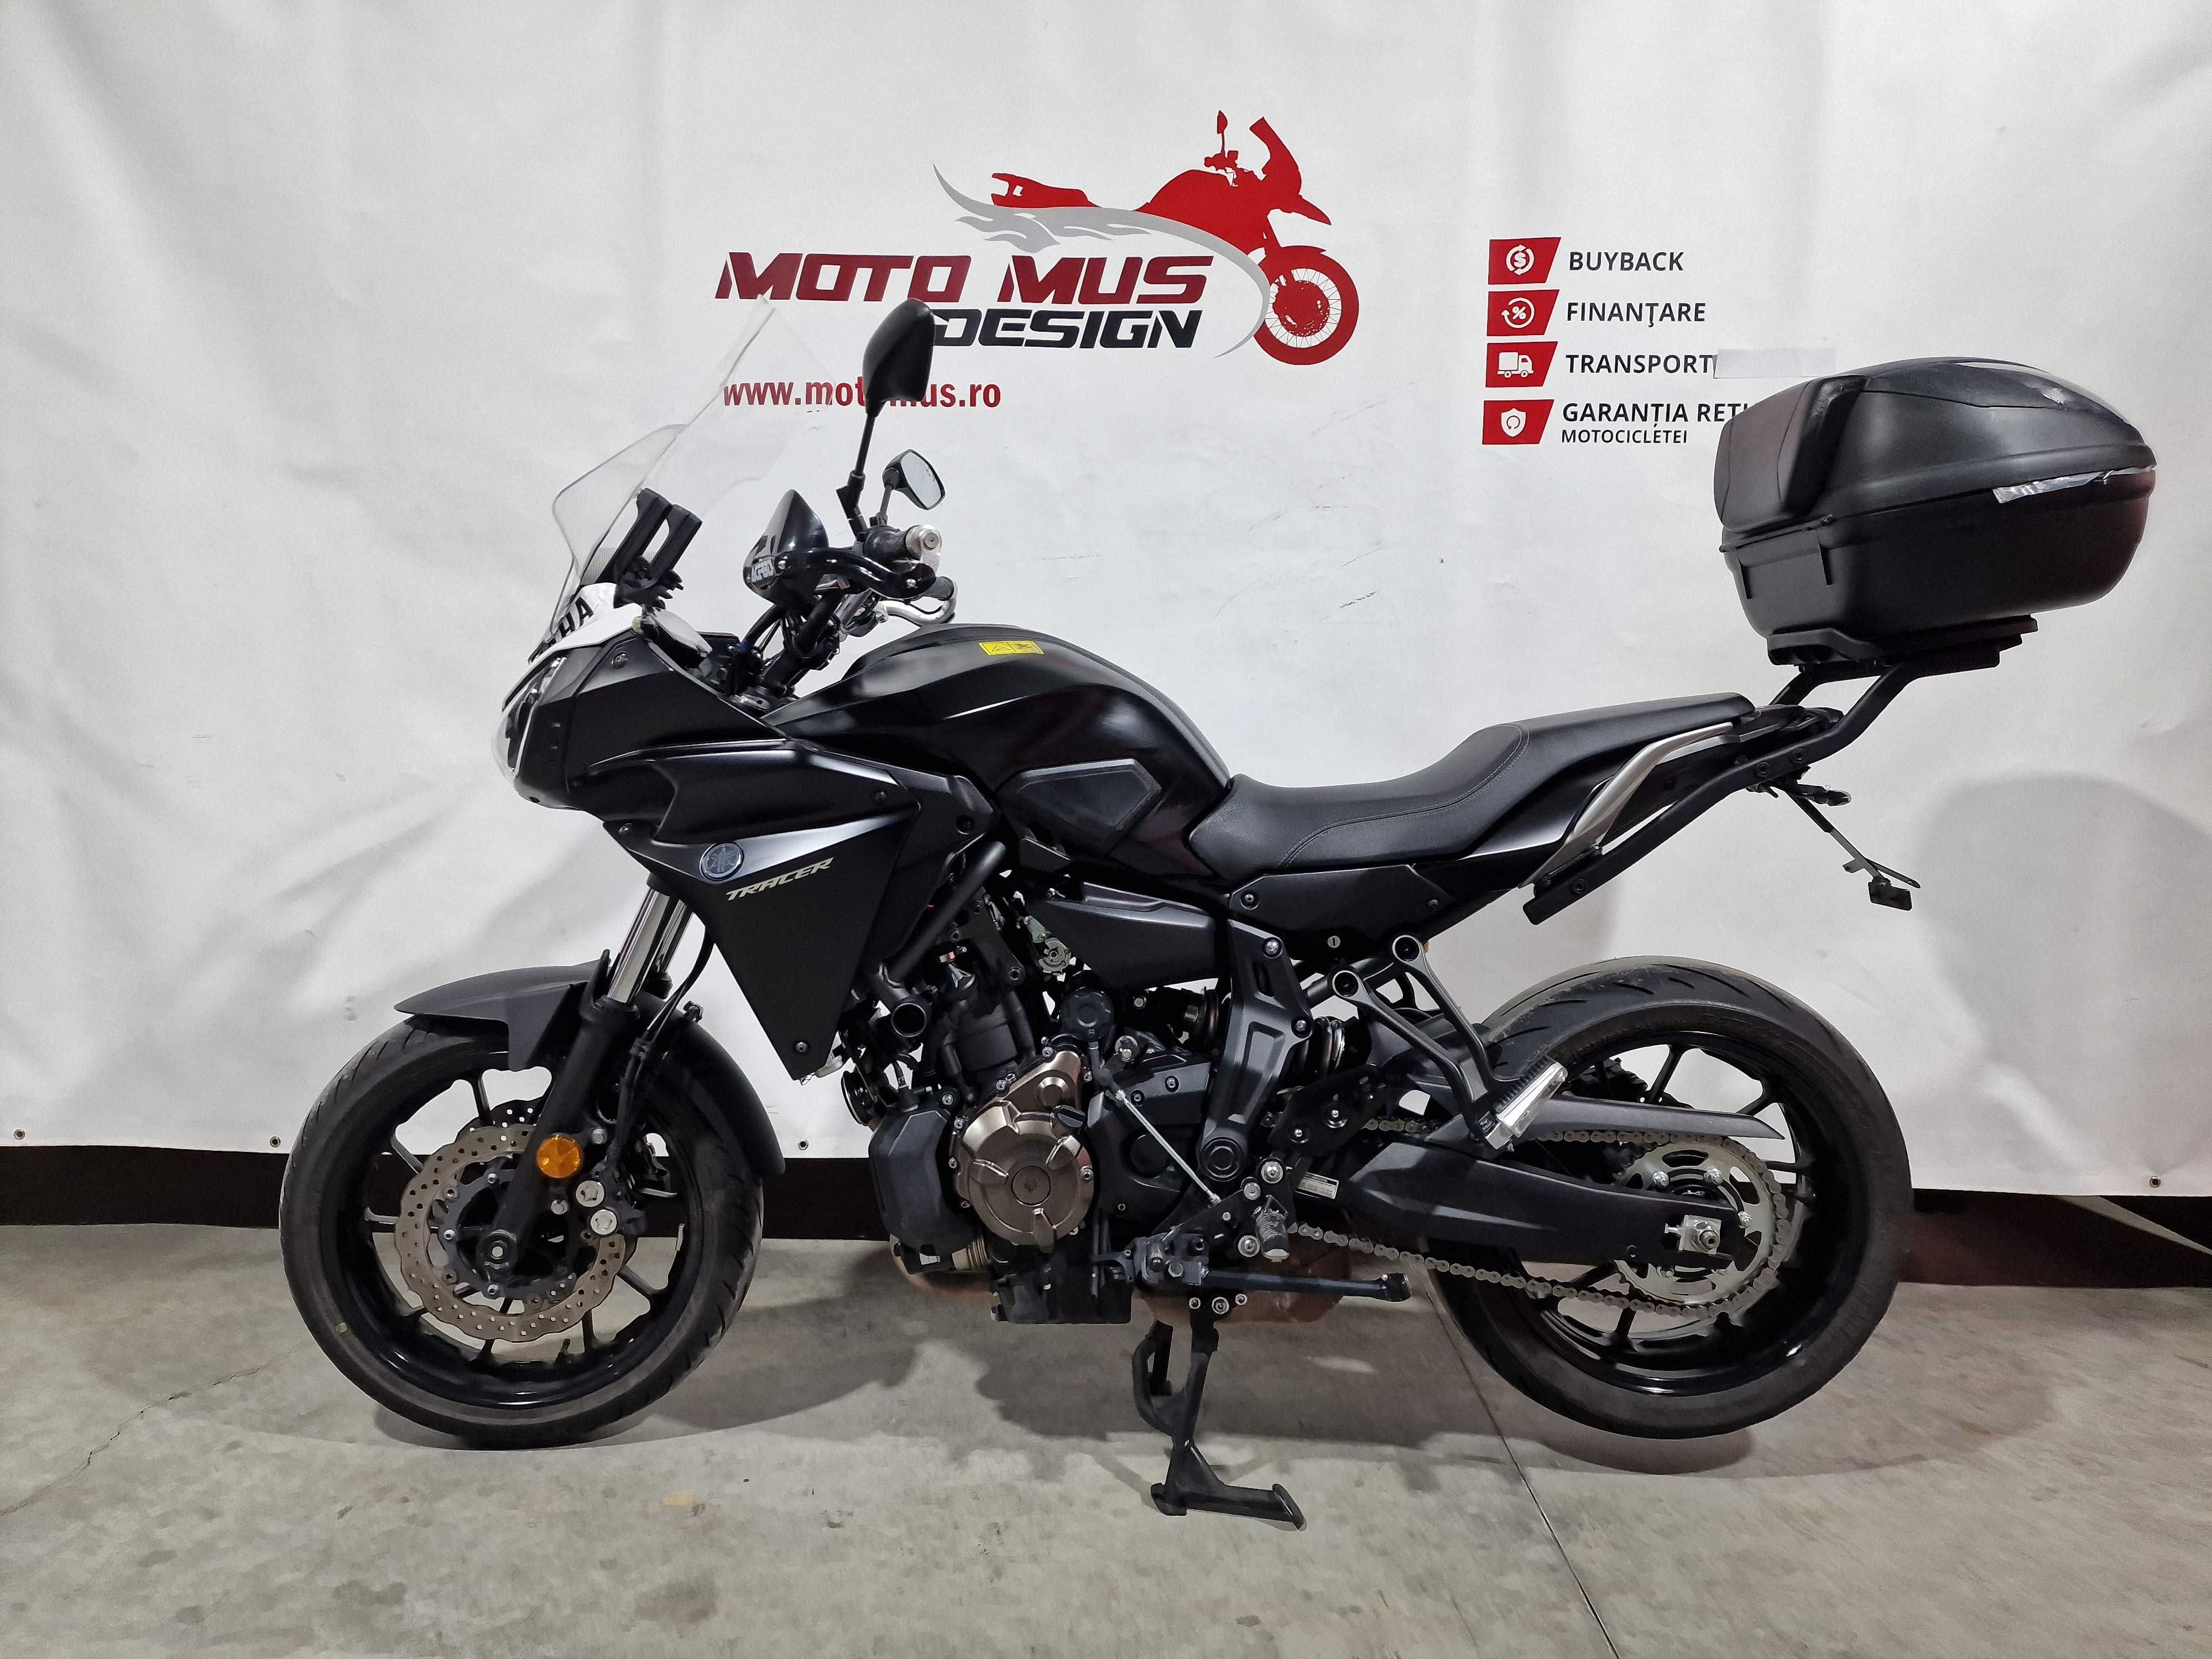 MotoMus vinde Motocicleta Yamaha Tracer 700 ABS 700cc 74CP - Y06043